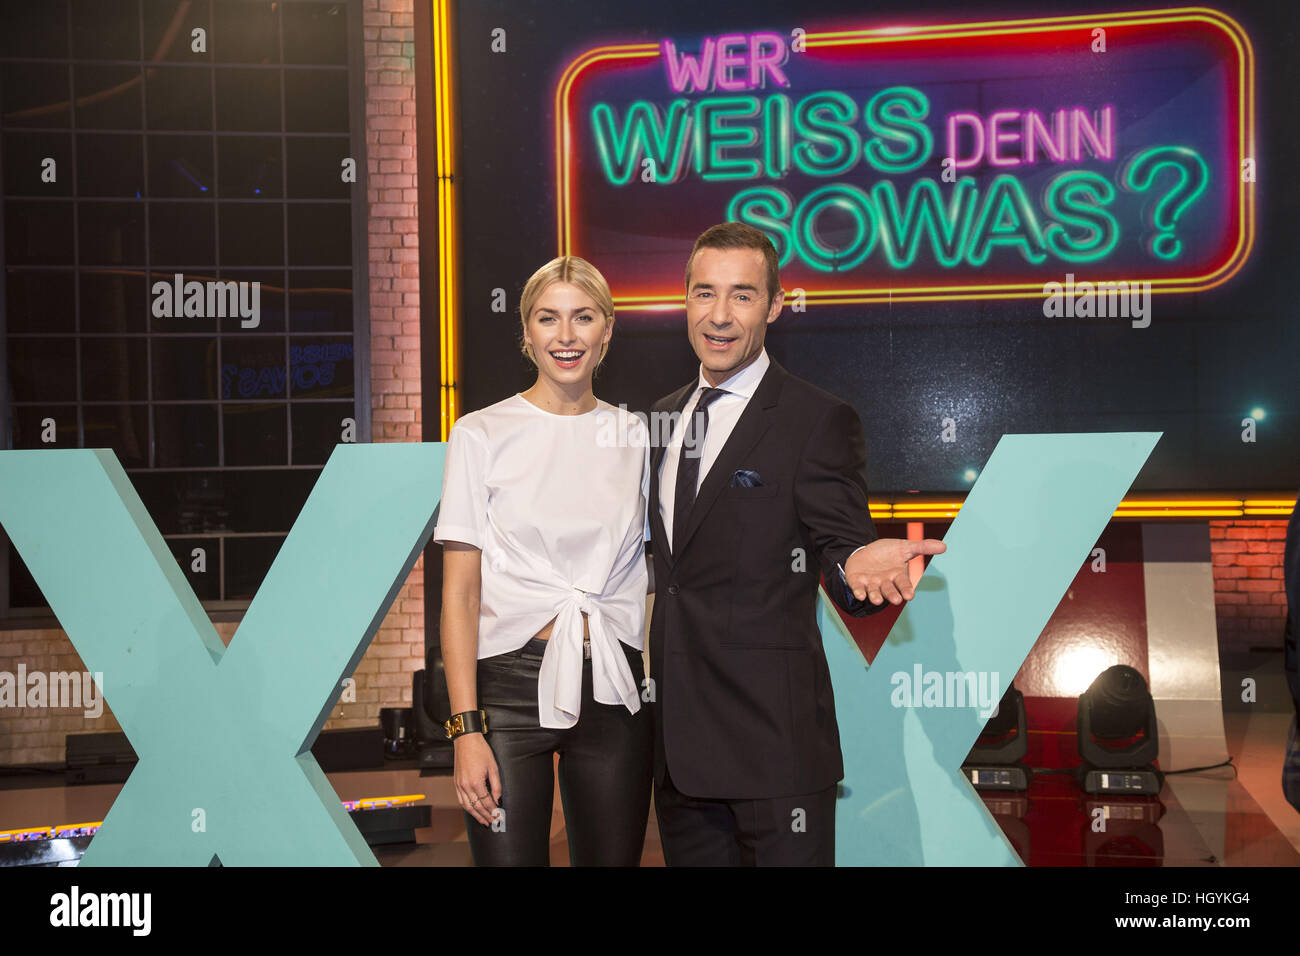 Celebrities attending the 'Wer weiss denn sowas? XXL' how at Studio Hamburg  Featuring: Lena Gercke, Kai Pflaume Where: Hamburg, Germany When: 13 Dec 2016 Stock Photo